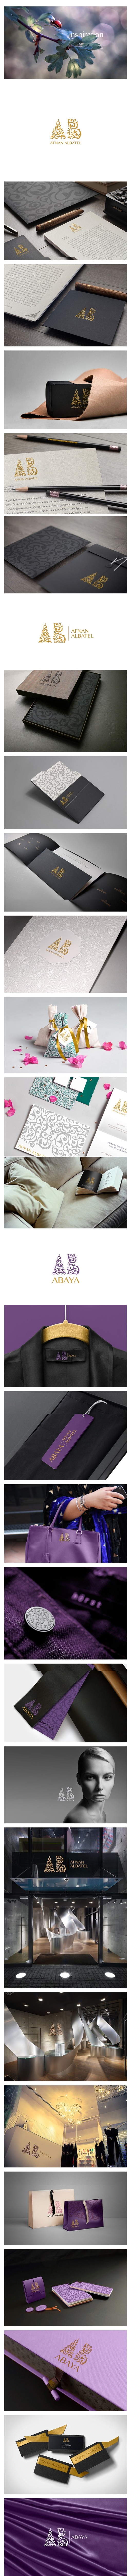 Afnan Albatel Brand Identity on Behance